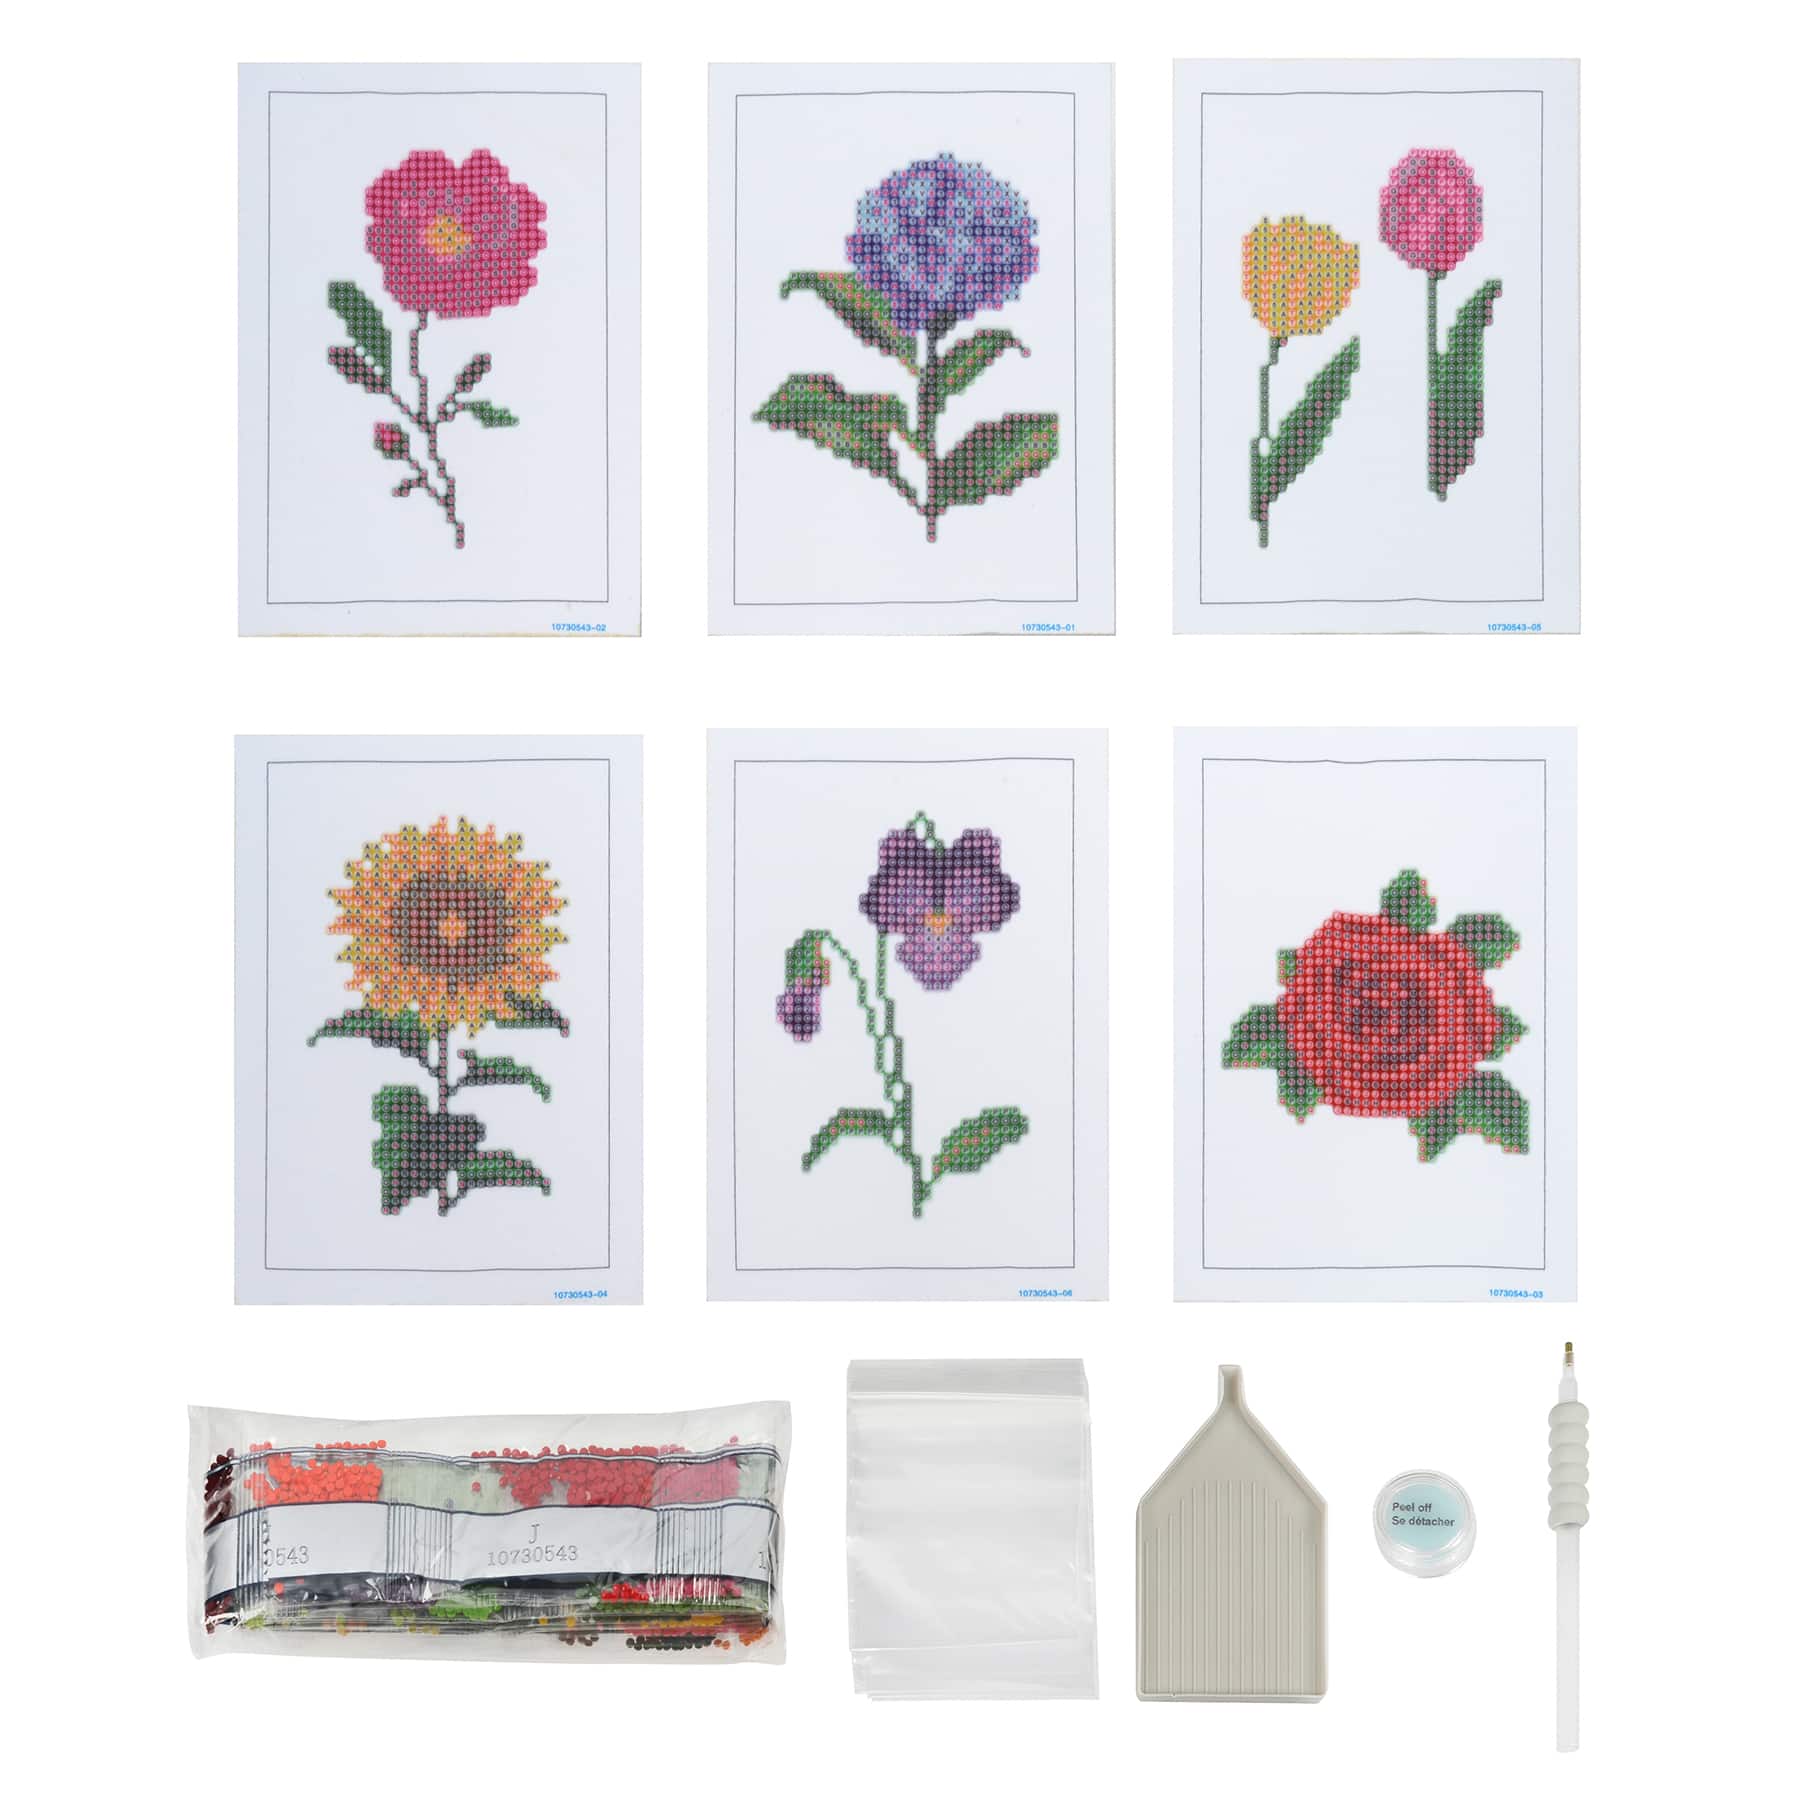 Flowers Diamond Art Kit by Make Market&#xAE;